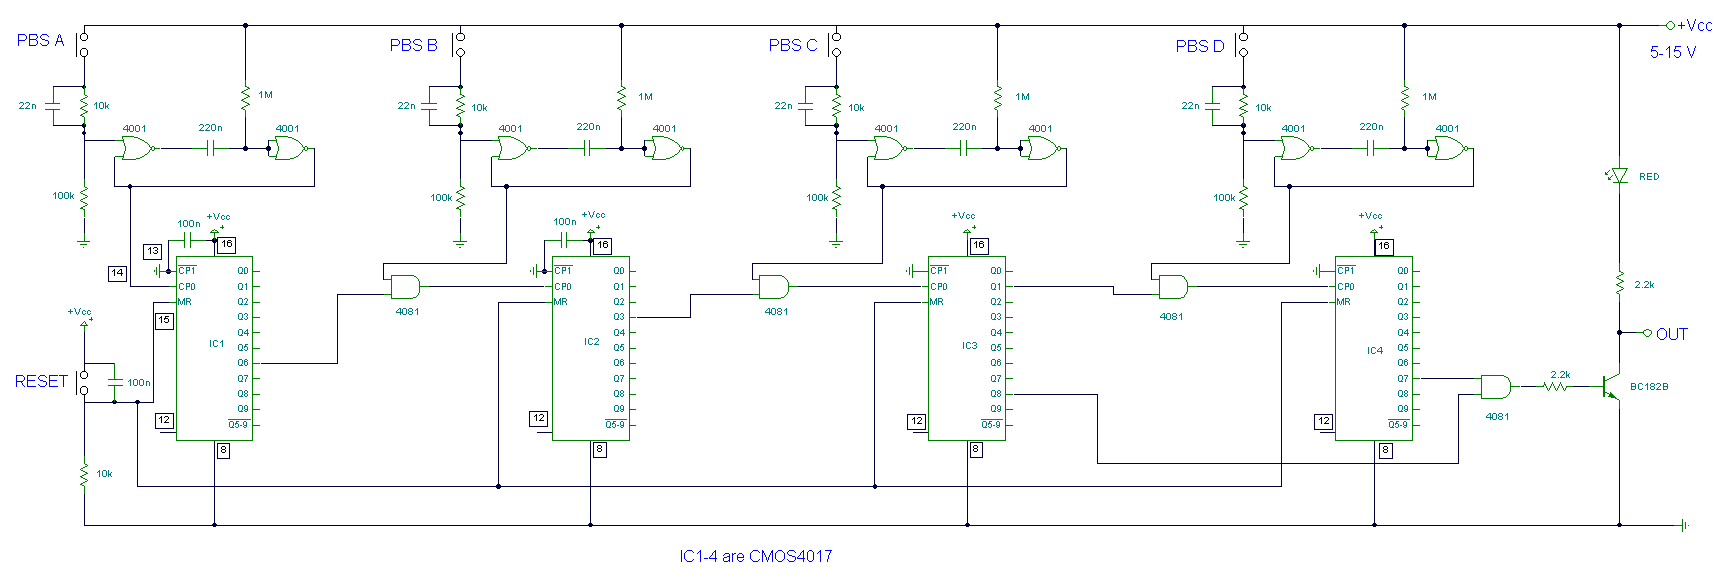 Digital Combination Lock Circuit Diagram